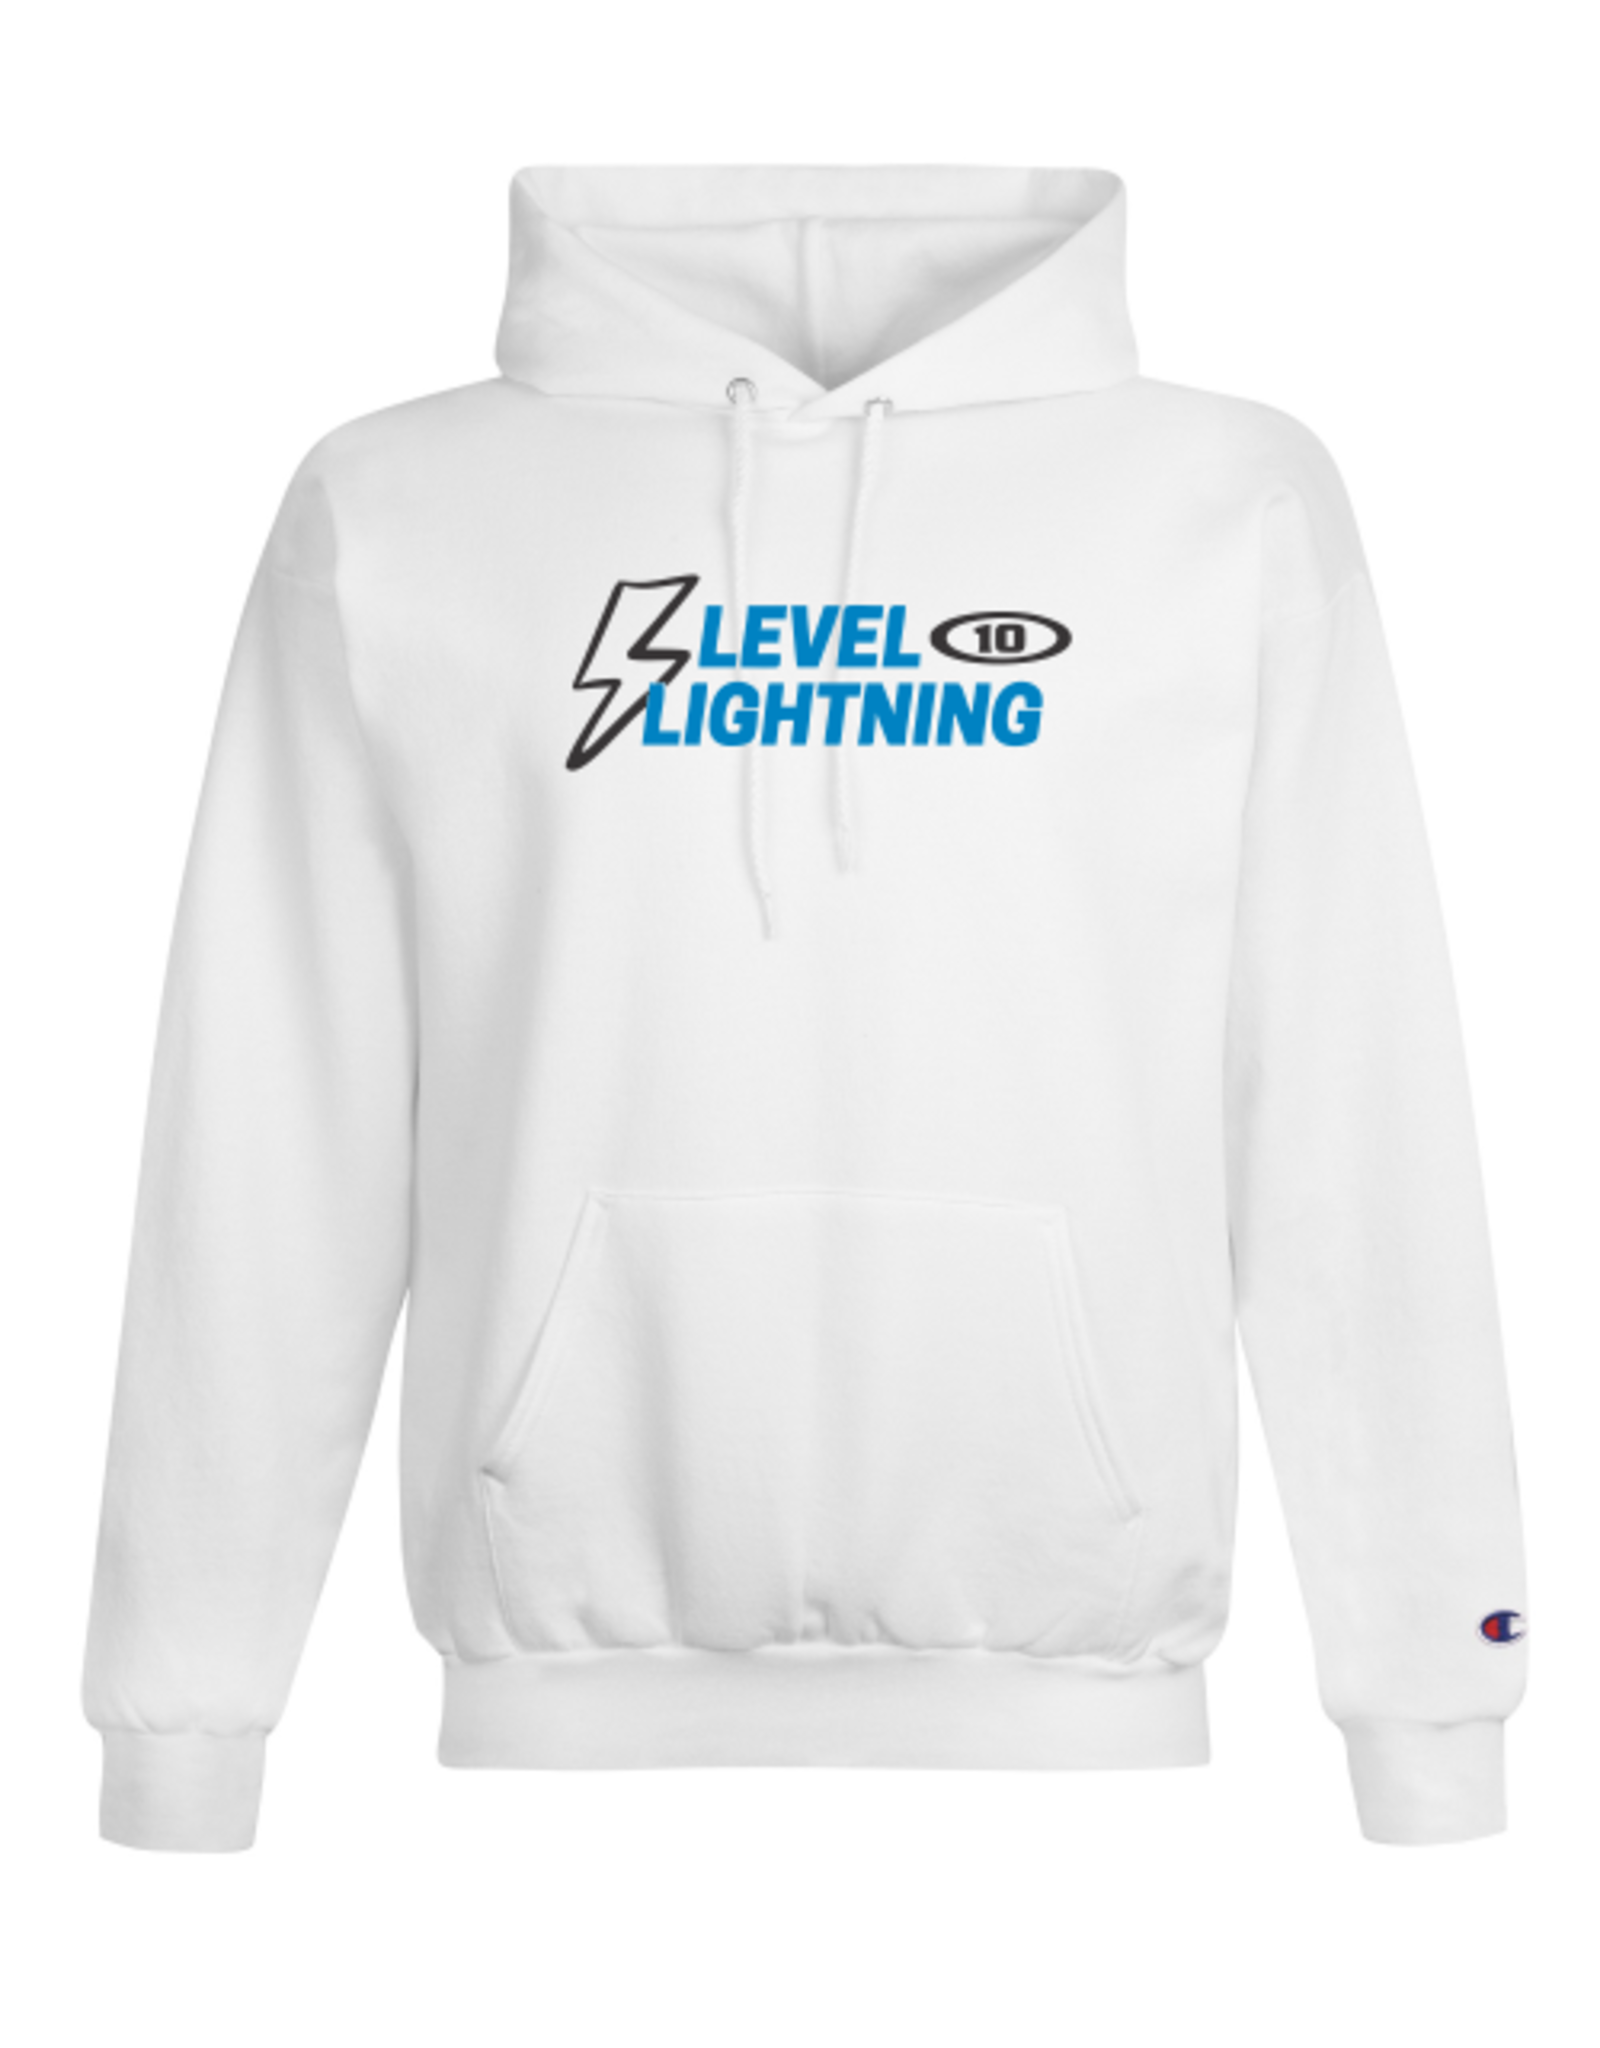 Champion Level 10 Lightning Hoodie